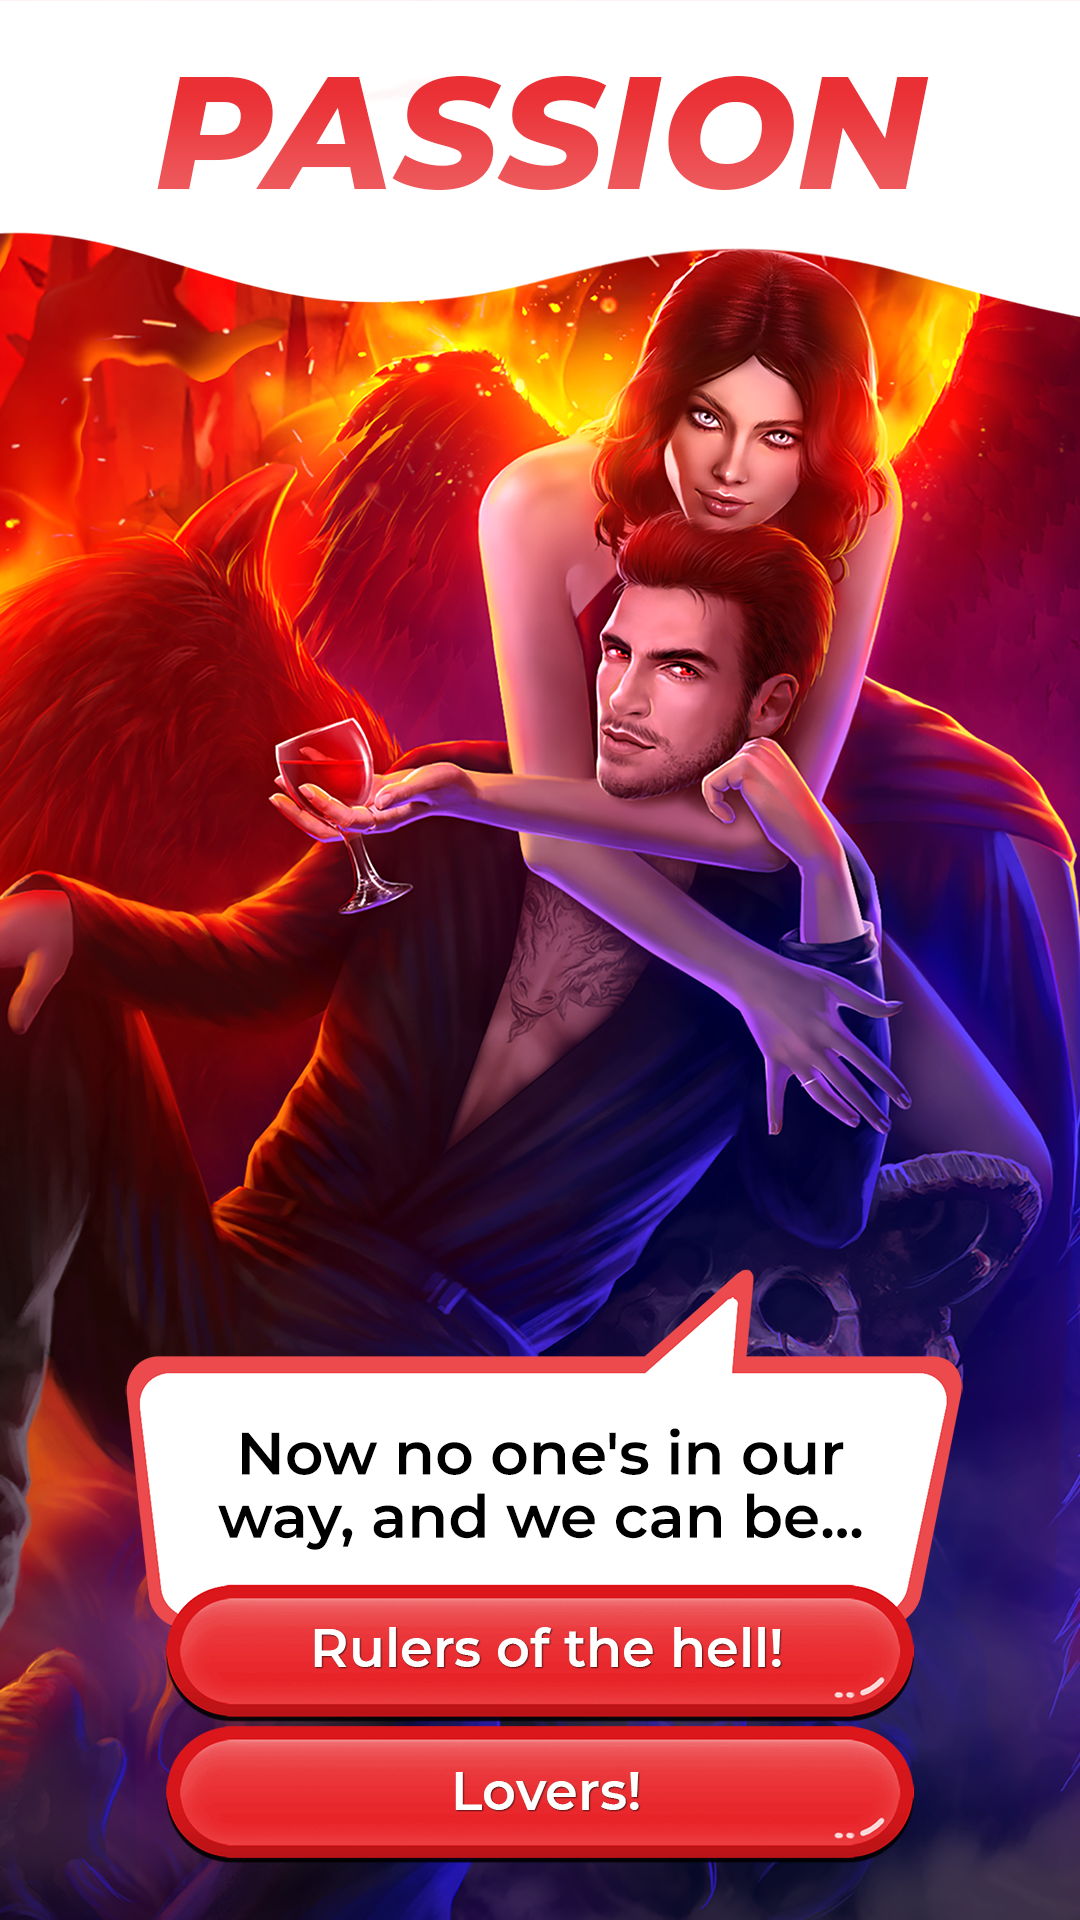 romance club stories i play apk 1 0 9500 download for android download romance club stories i play apk latest version apkfab com